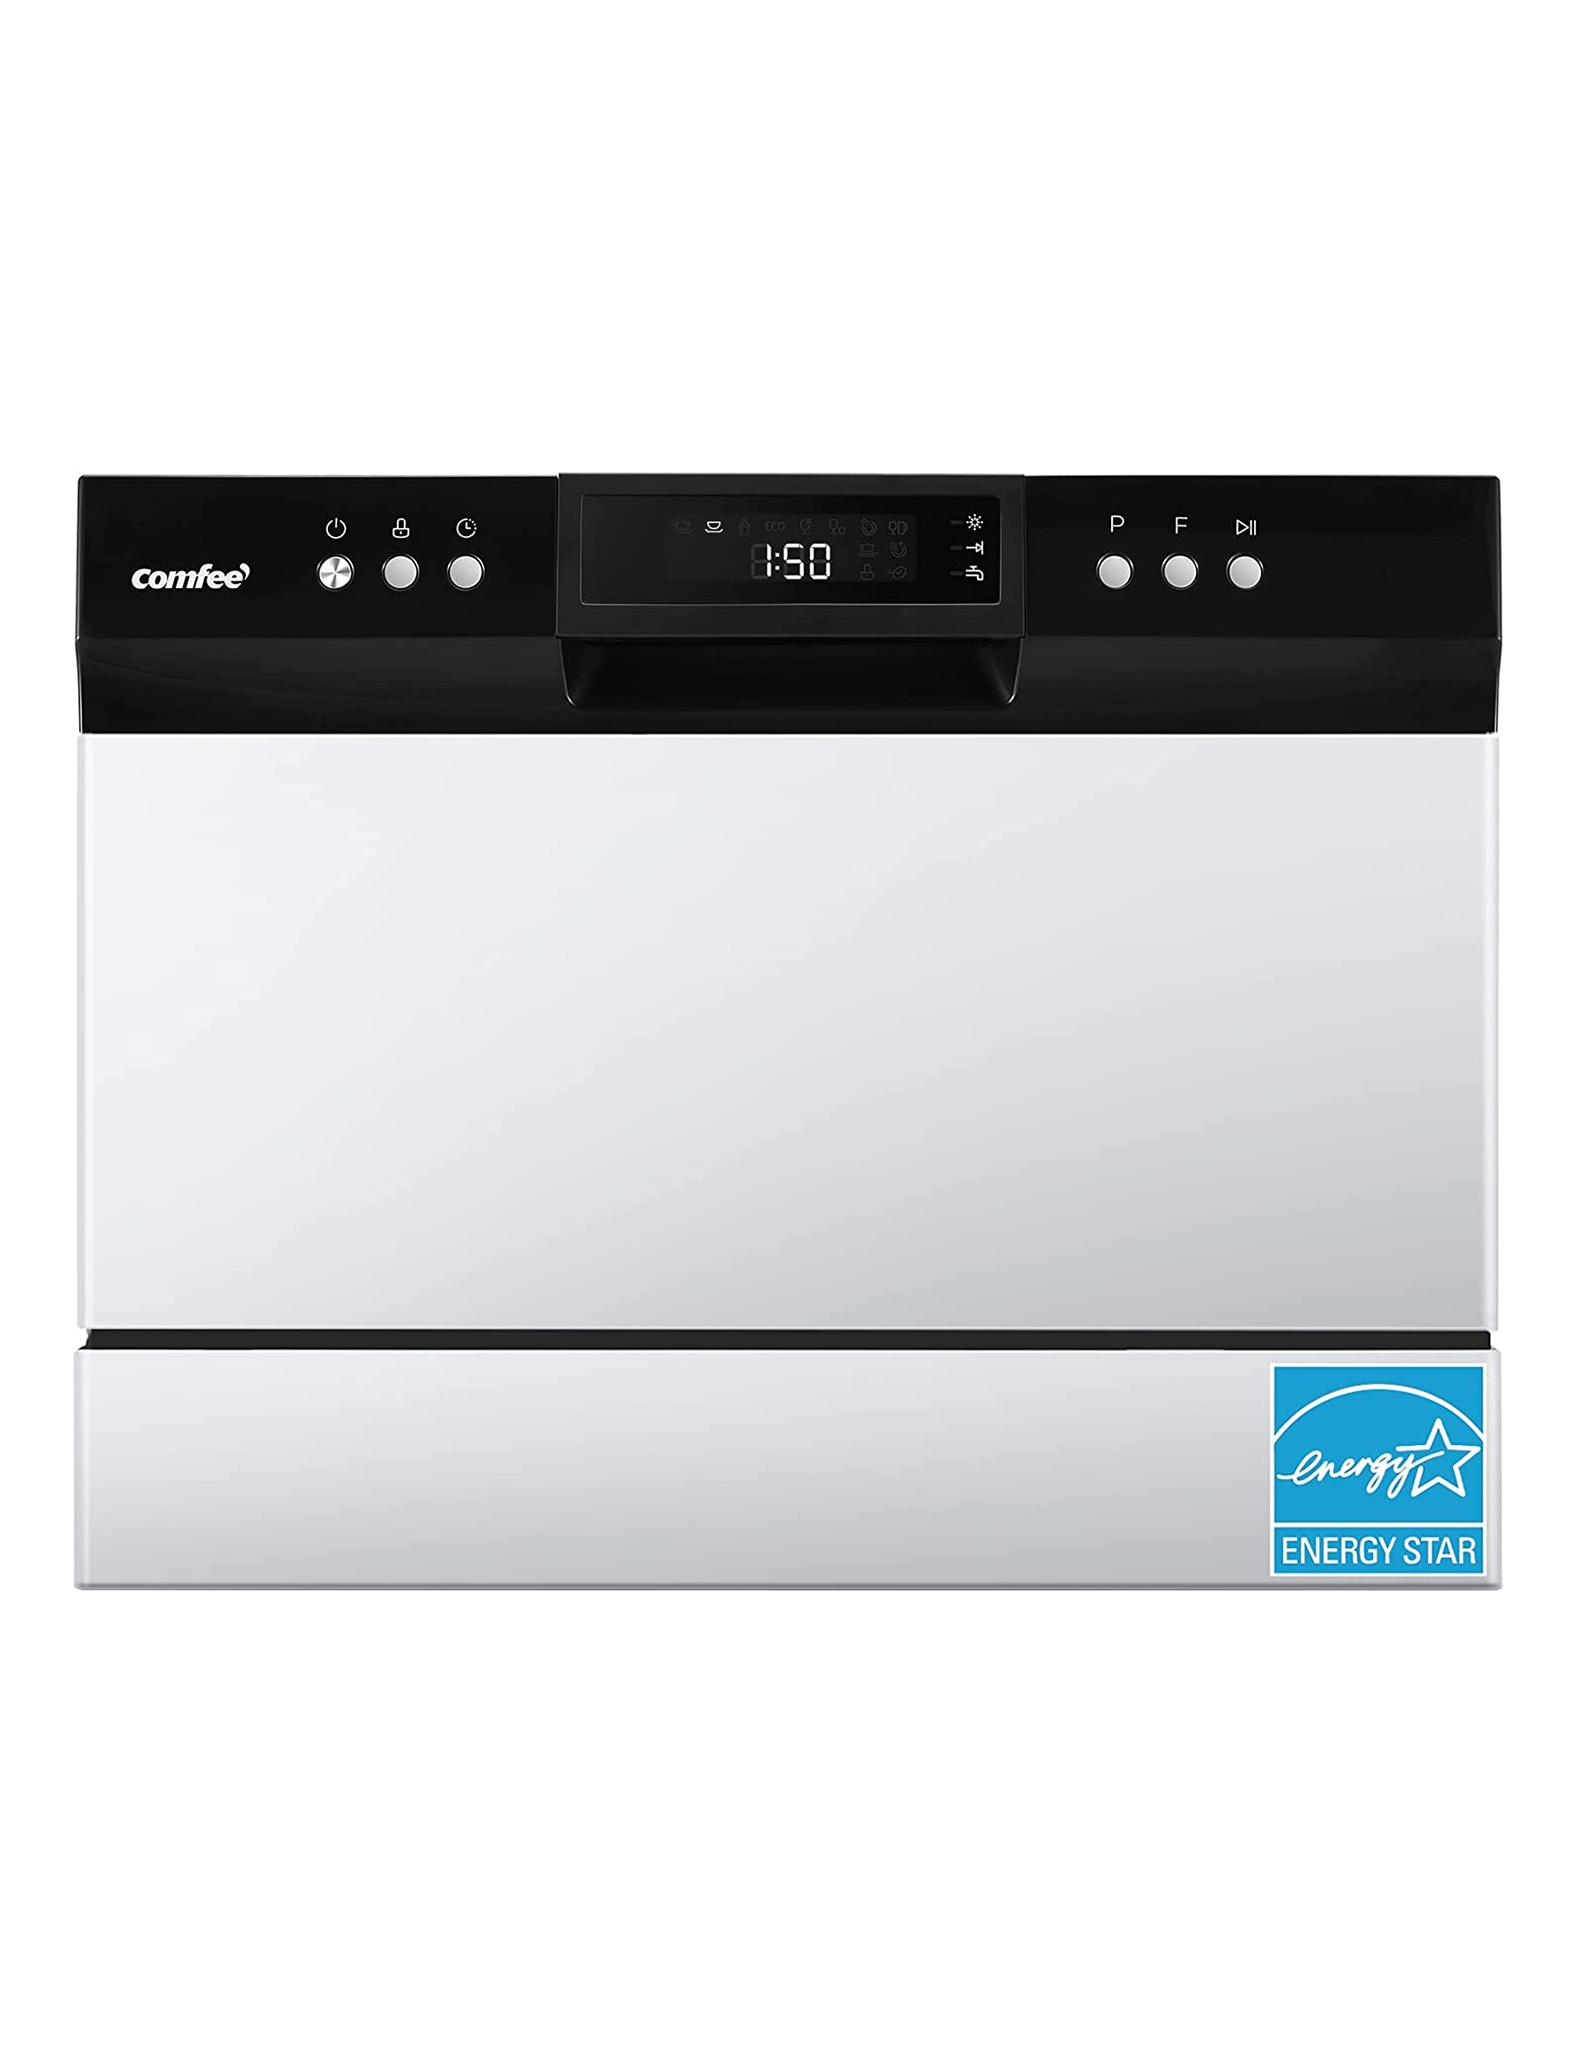 COMFEE Countertop Dishwasher, Energy Star Portable Dishwasher, 6